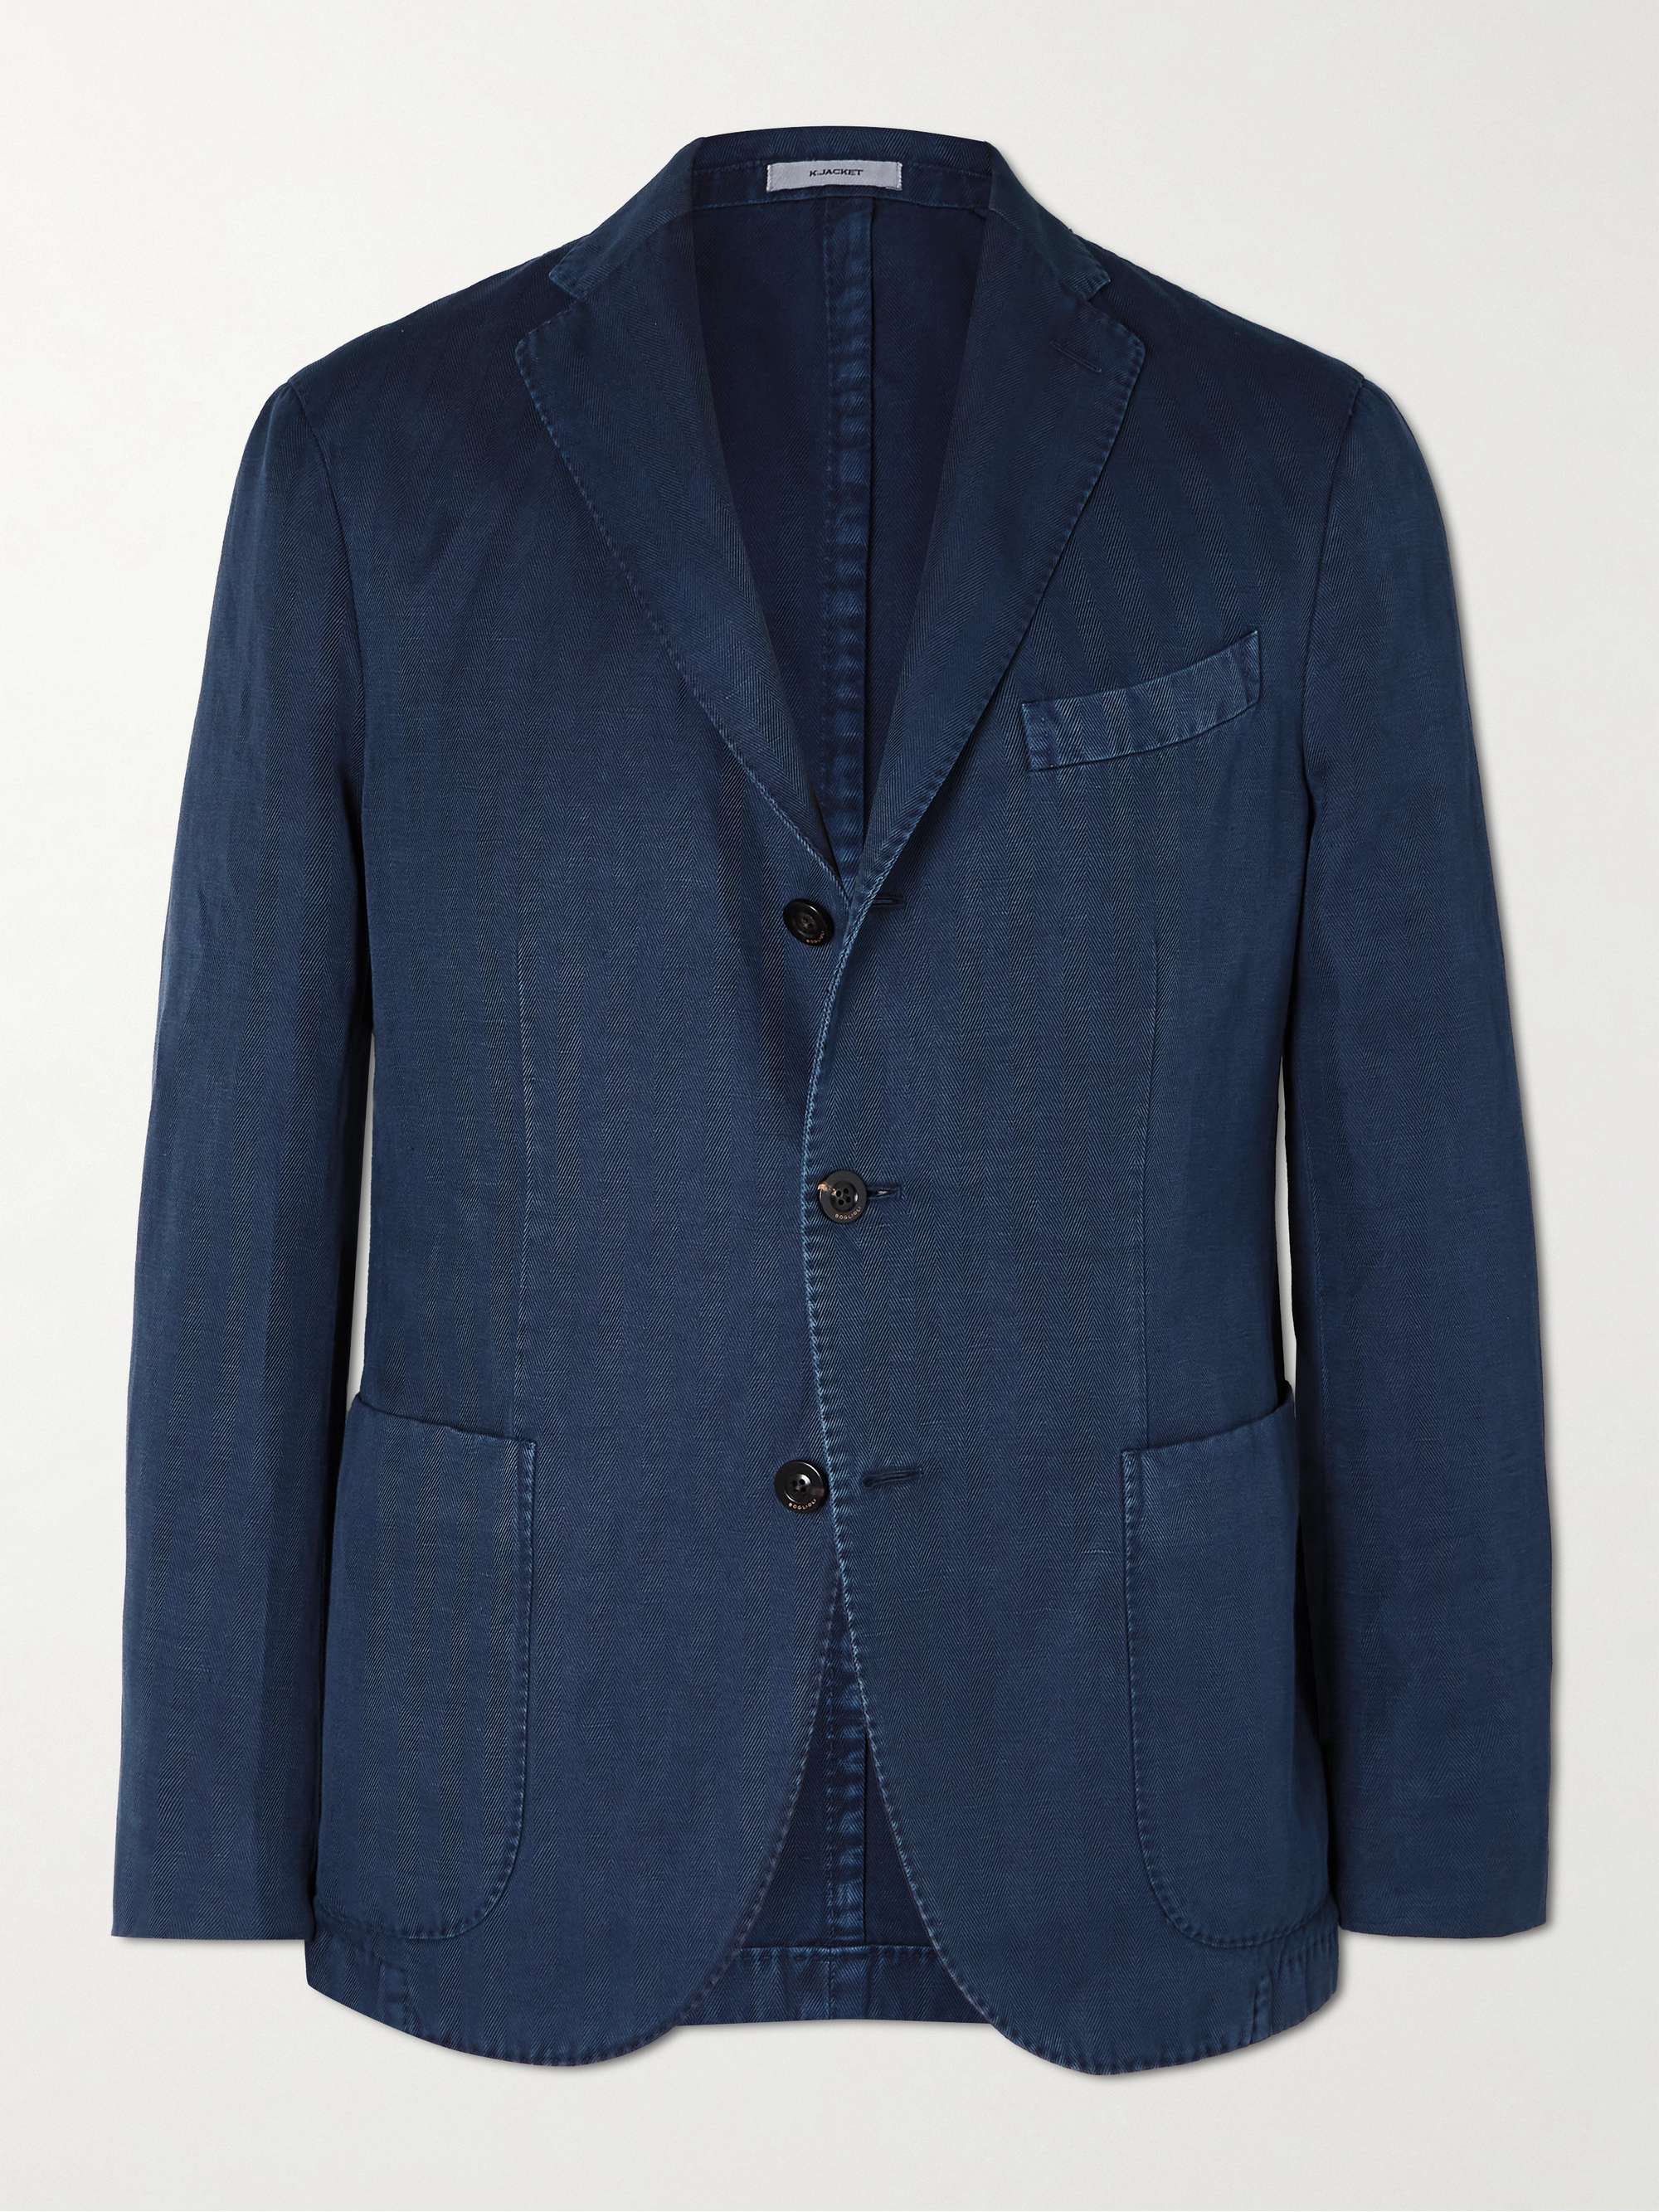 BOGLIOLI Slim-Fit Unstructured Herringbone Cotton and Linen-Blend Suit Jacket